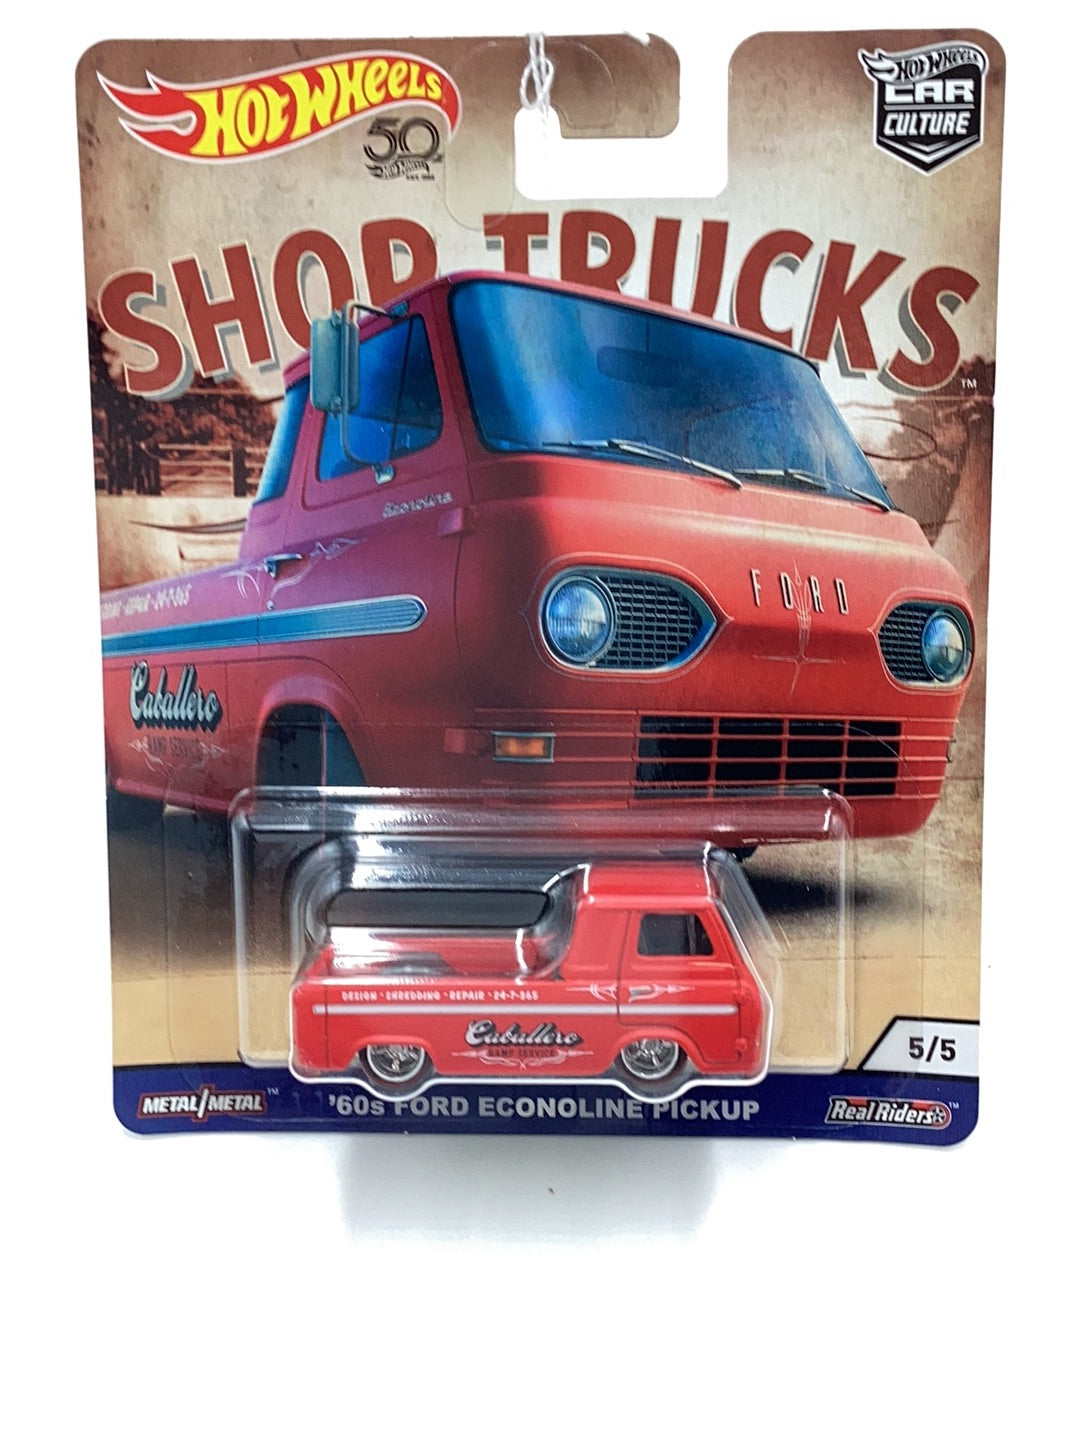 Hot wheels car culture Shop Trucks 5/5 60s Ford Econoline pickup